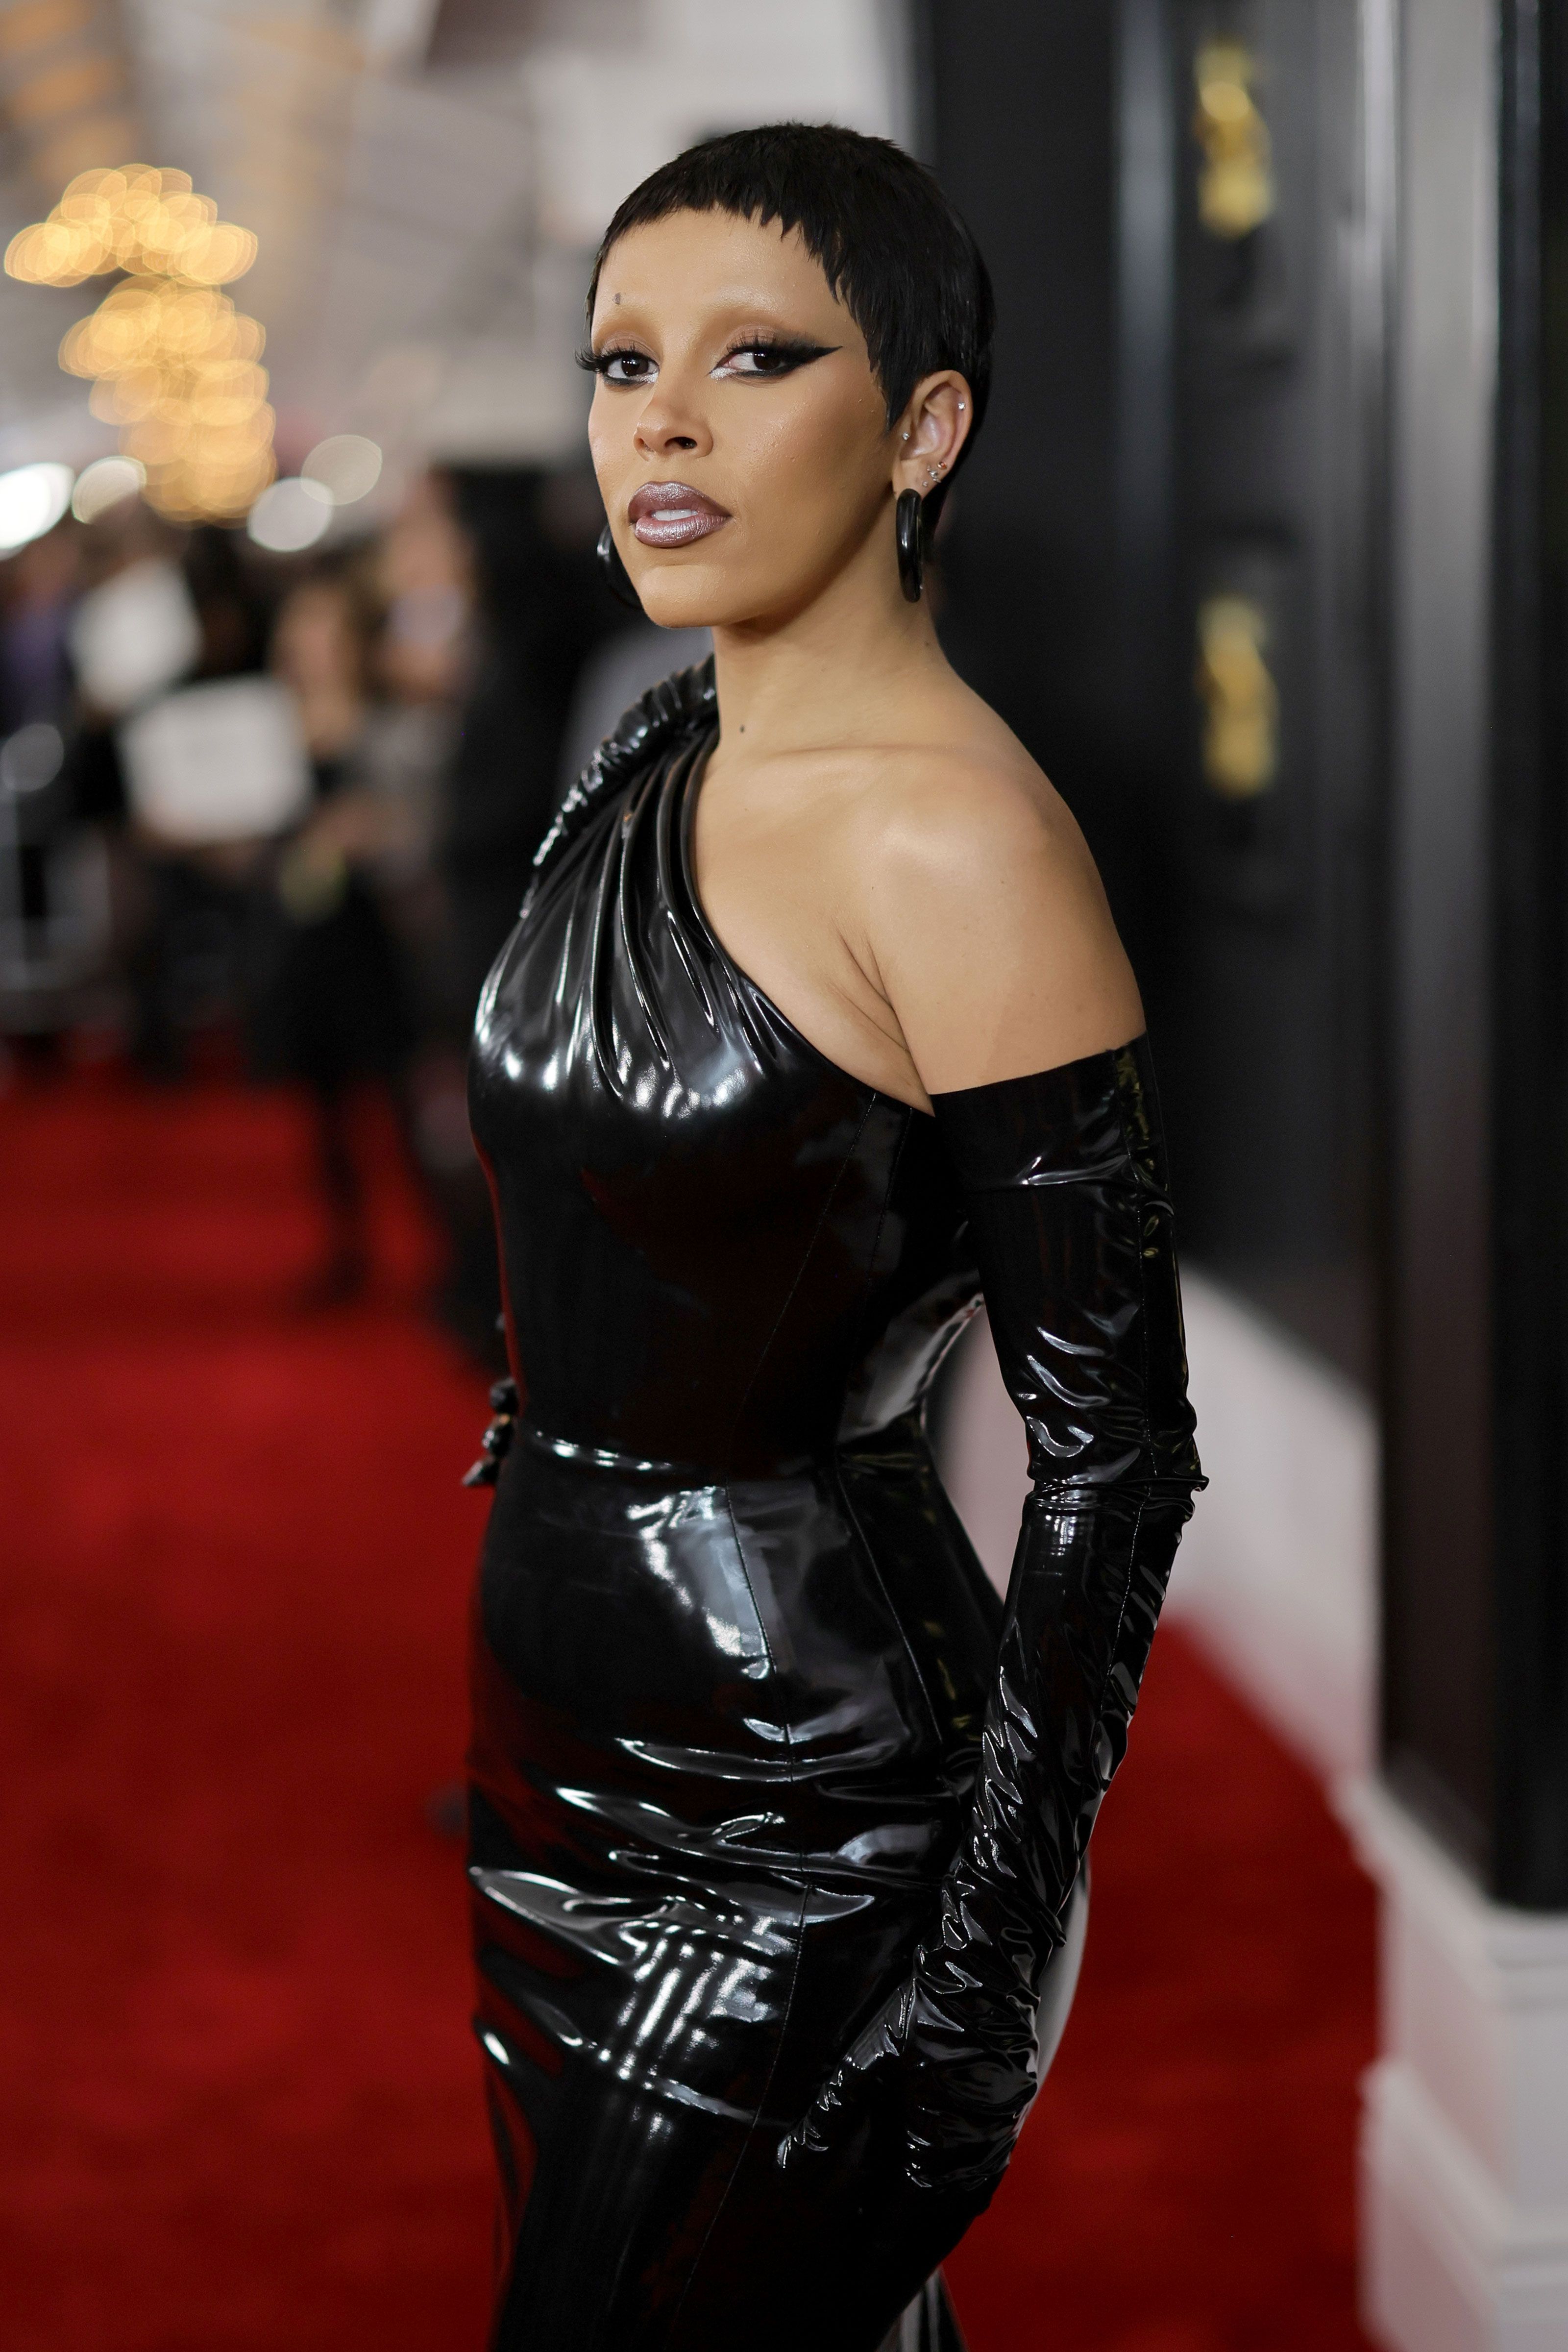 Doja Cat Wore Versace Black Dress on Grammys 2023 Red Carpet